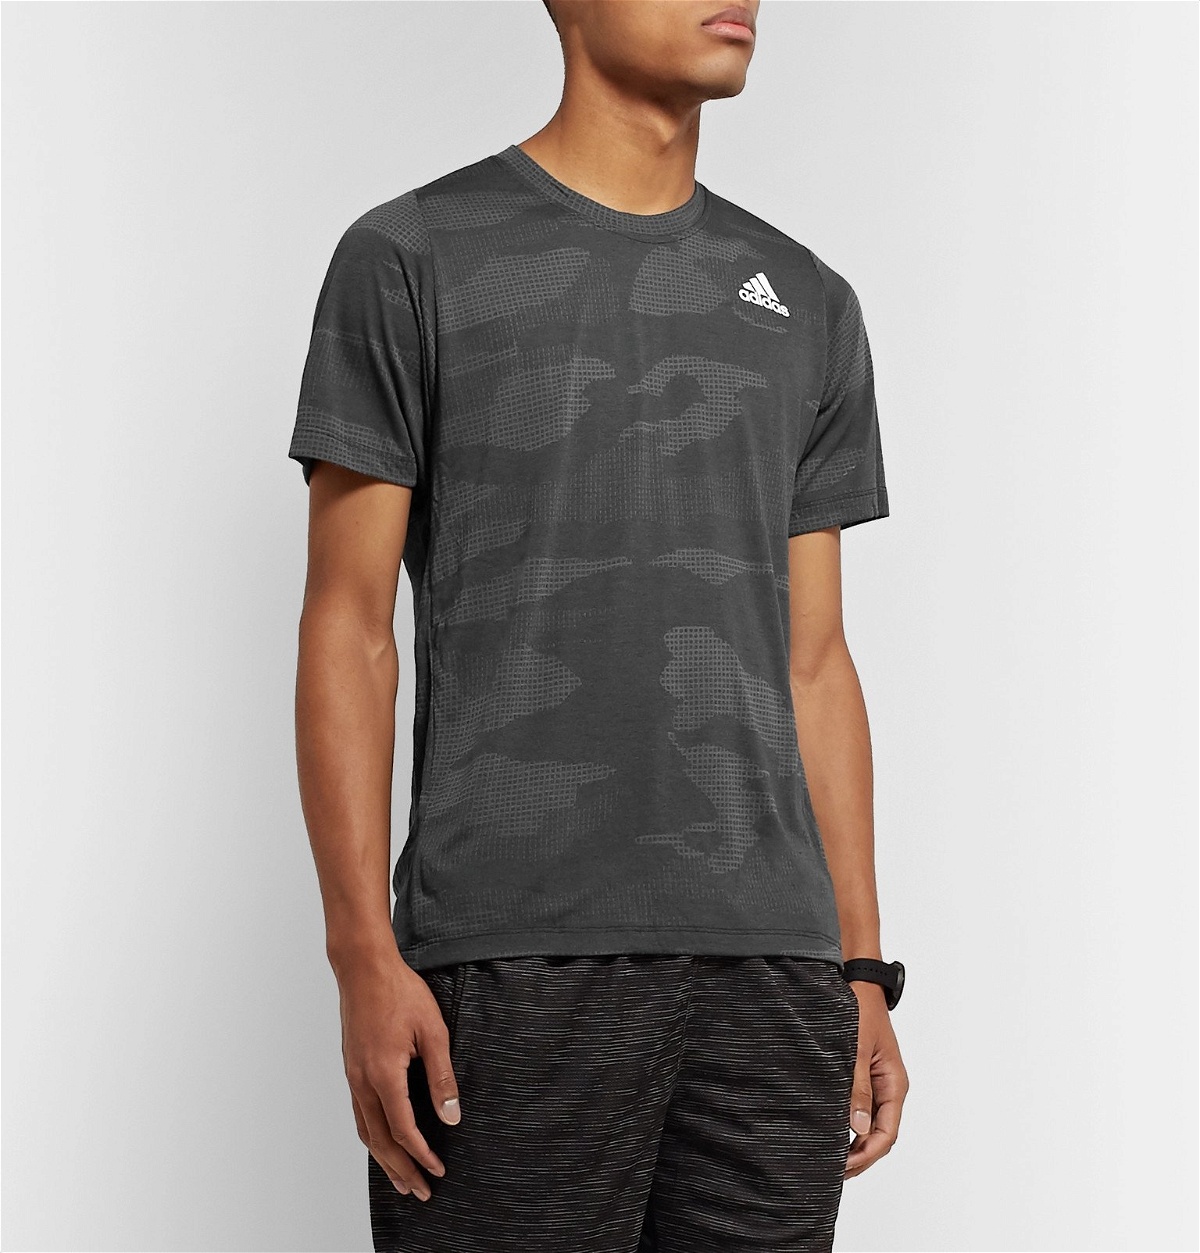 Adidas Sport - FreeLift adidas Climalite - Black T-Shirt Camouflage-Print